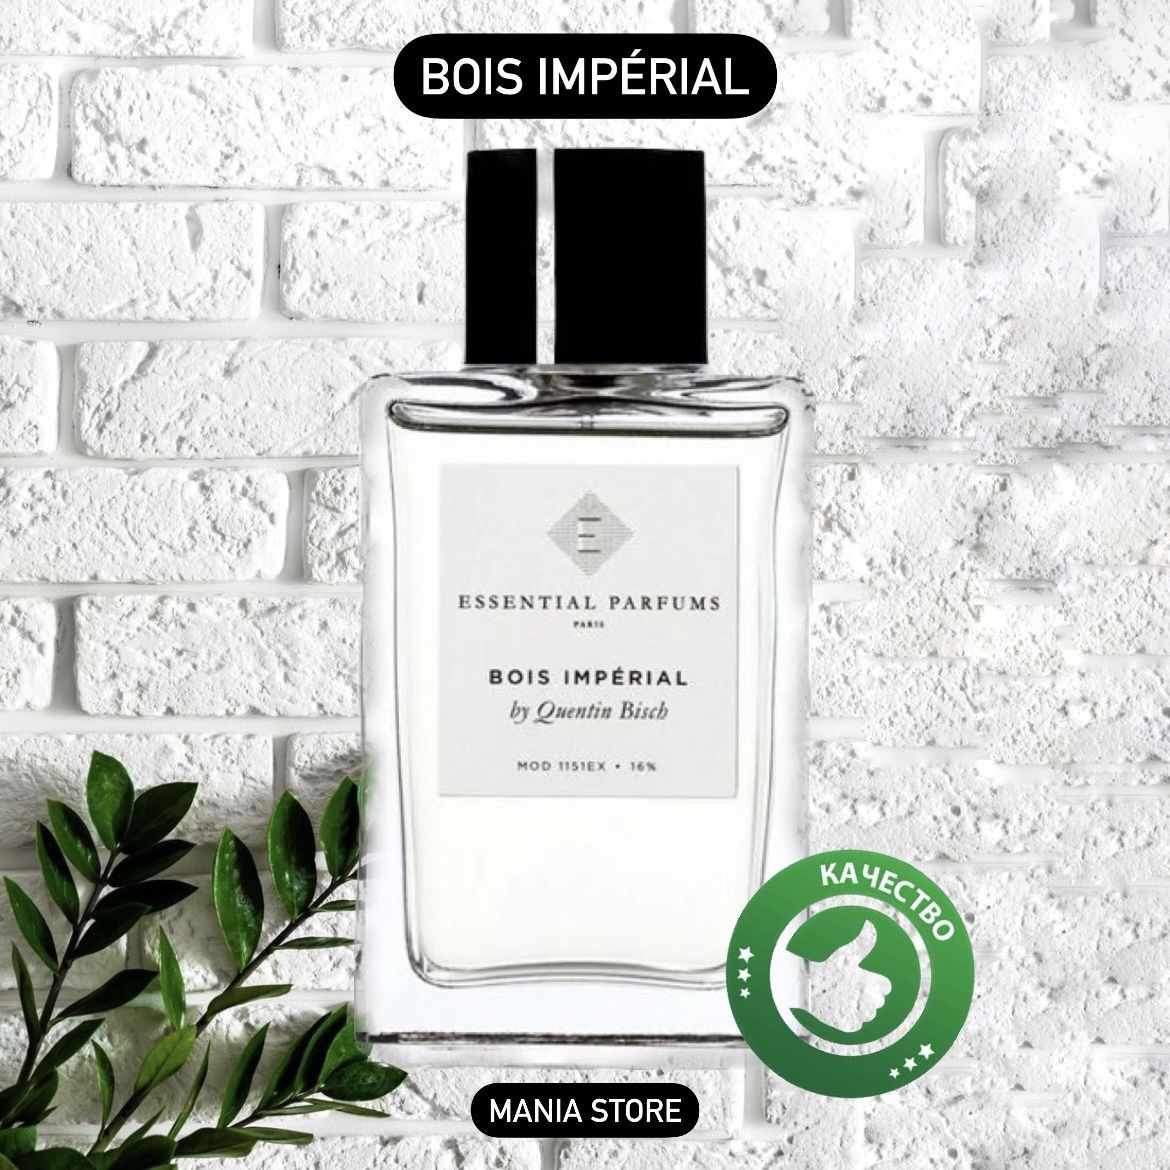 Bois imperial essential parfums limited edition. Bois Imperial Essential. Парфюмерная вода Эссентиалс. Bois Imperial линейка ароматов. Essential Parfums описание.